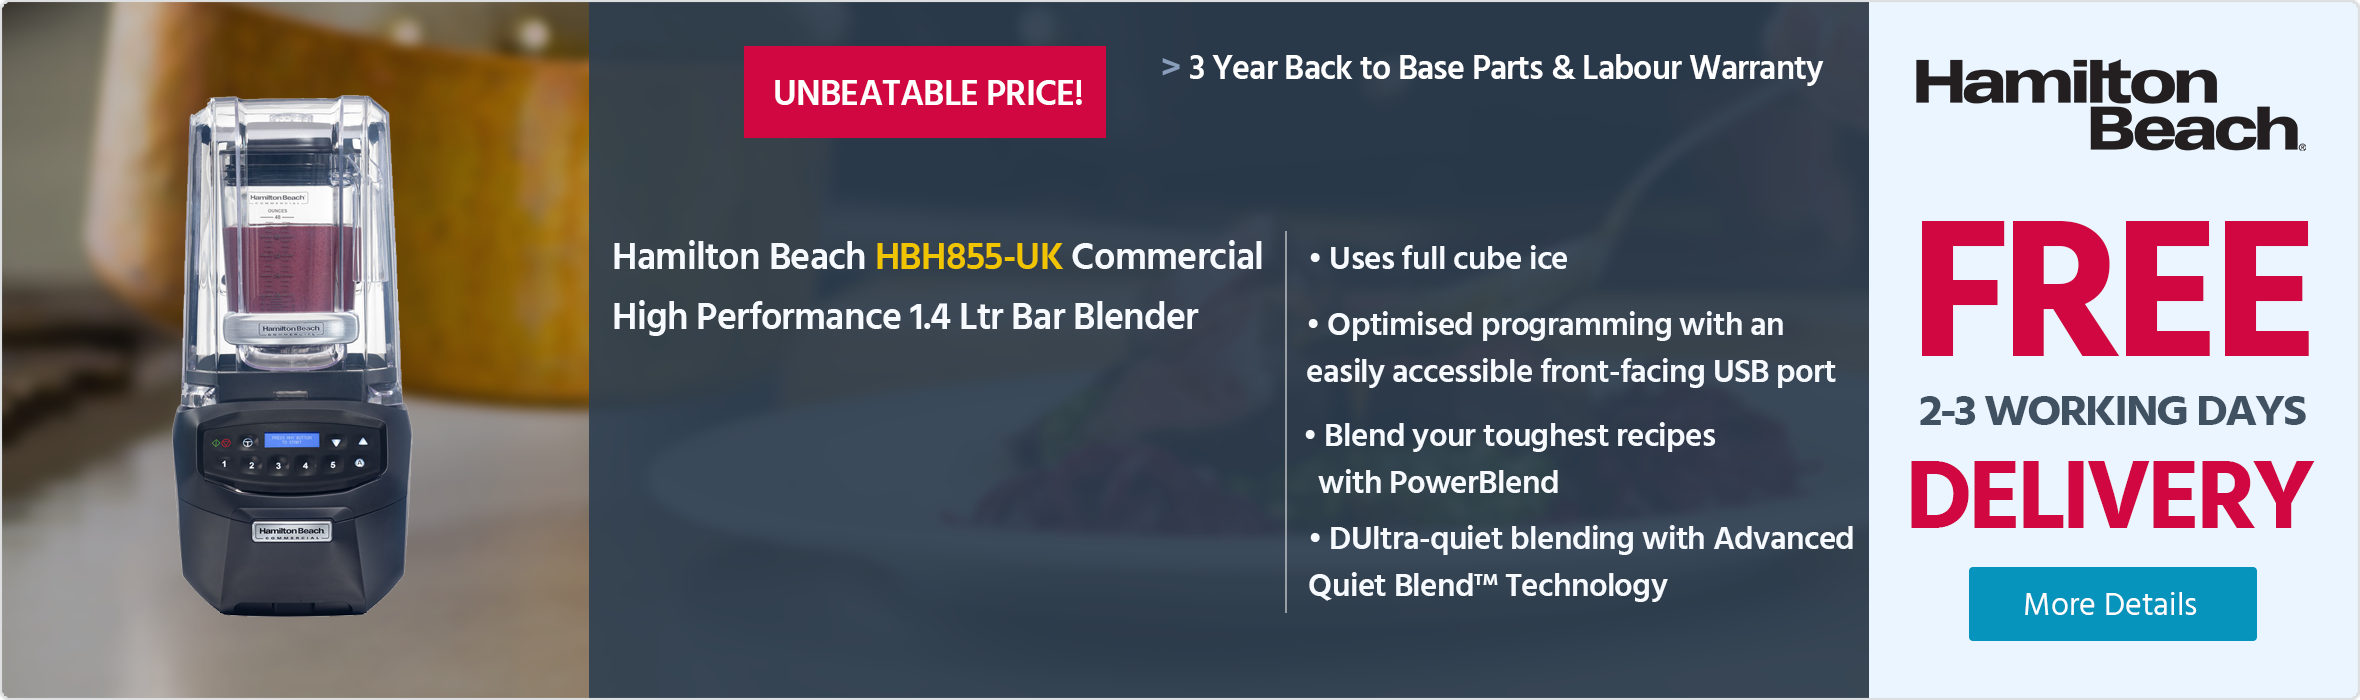 Hamilton Beach HBH855-UK Commercial Summit Edge High Performance 1.4 Ltr Bar Blender